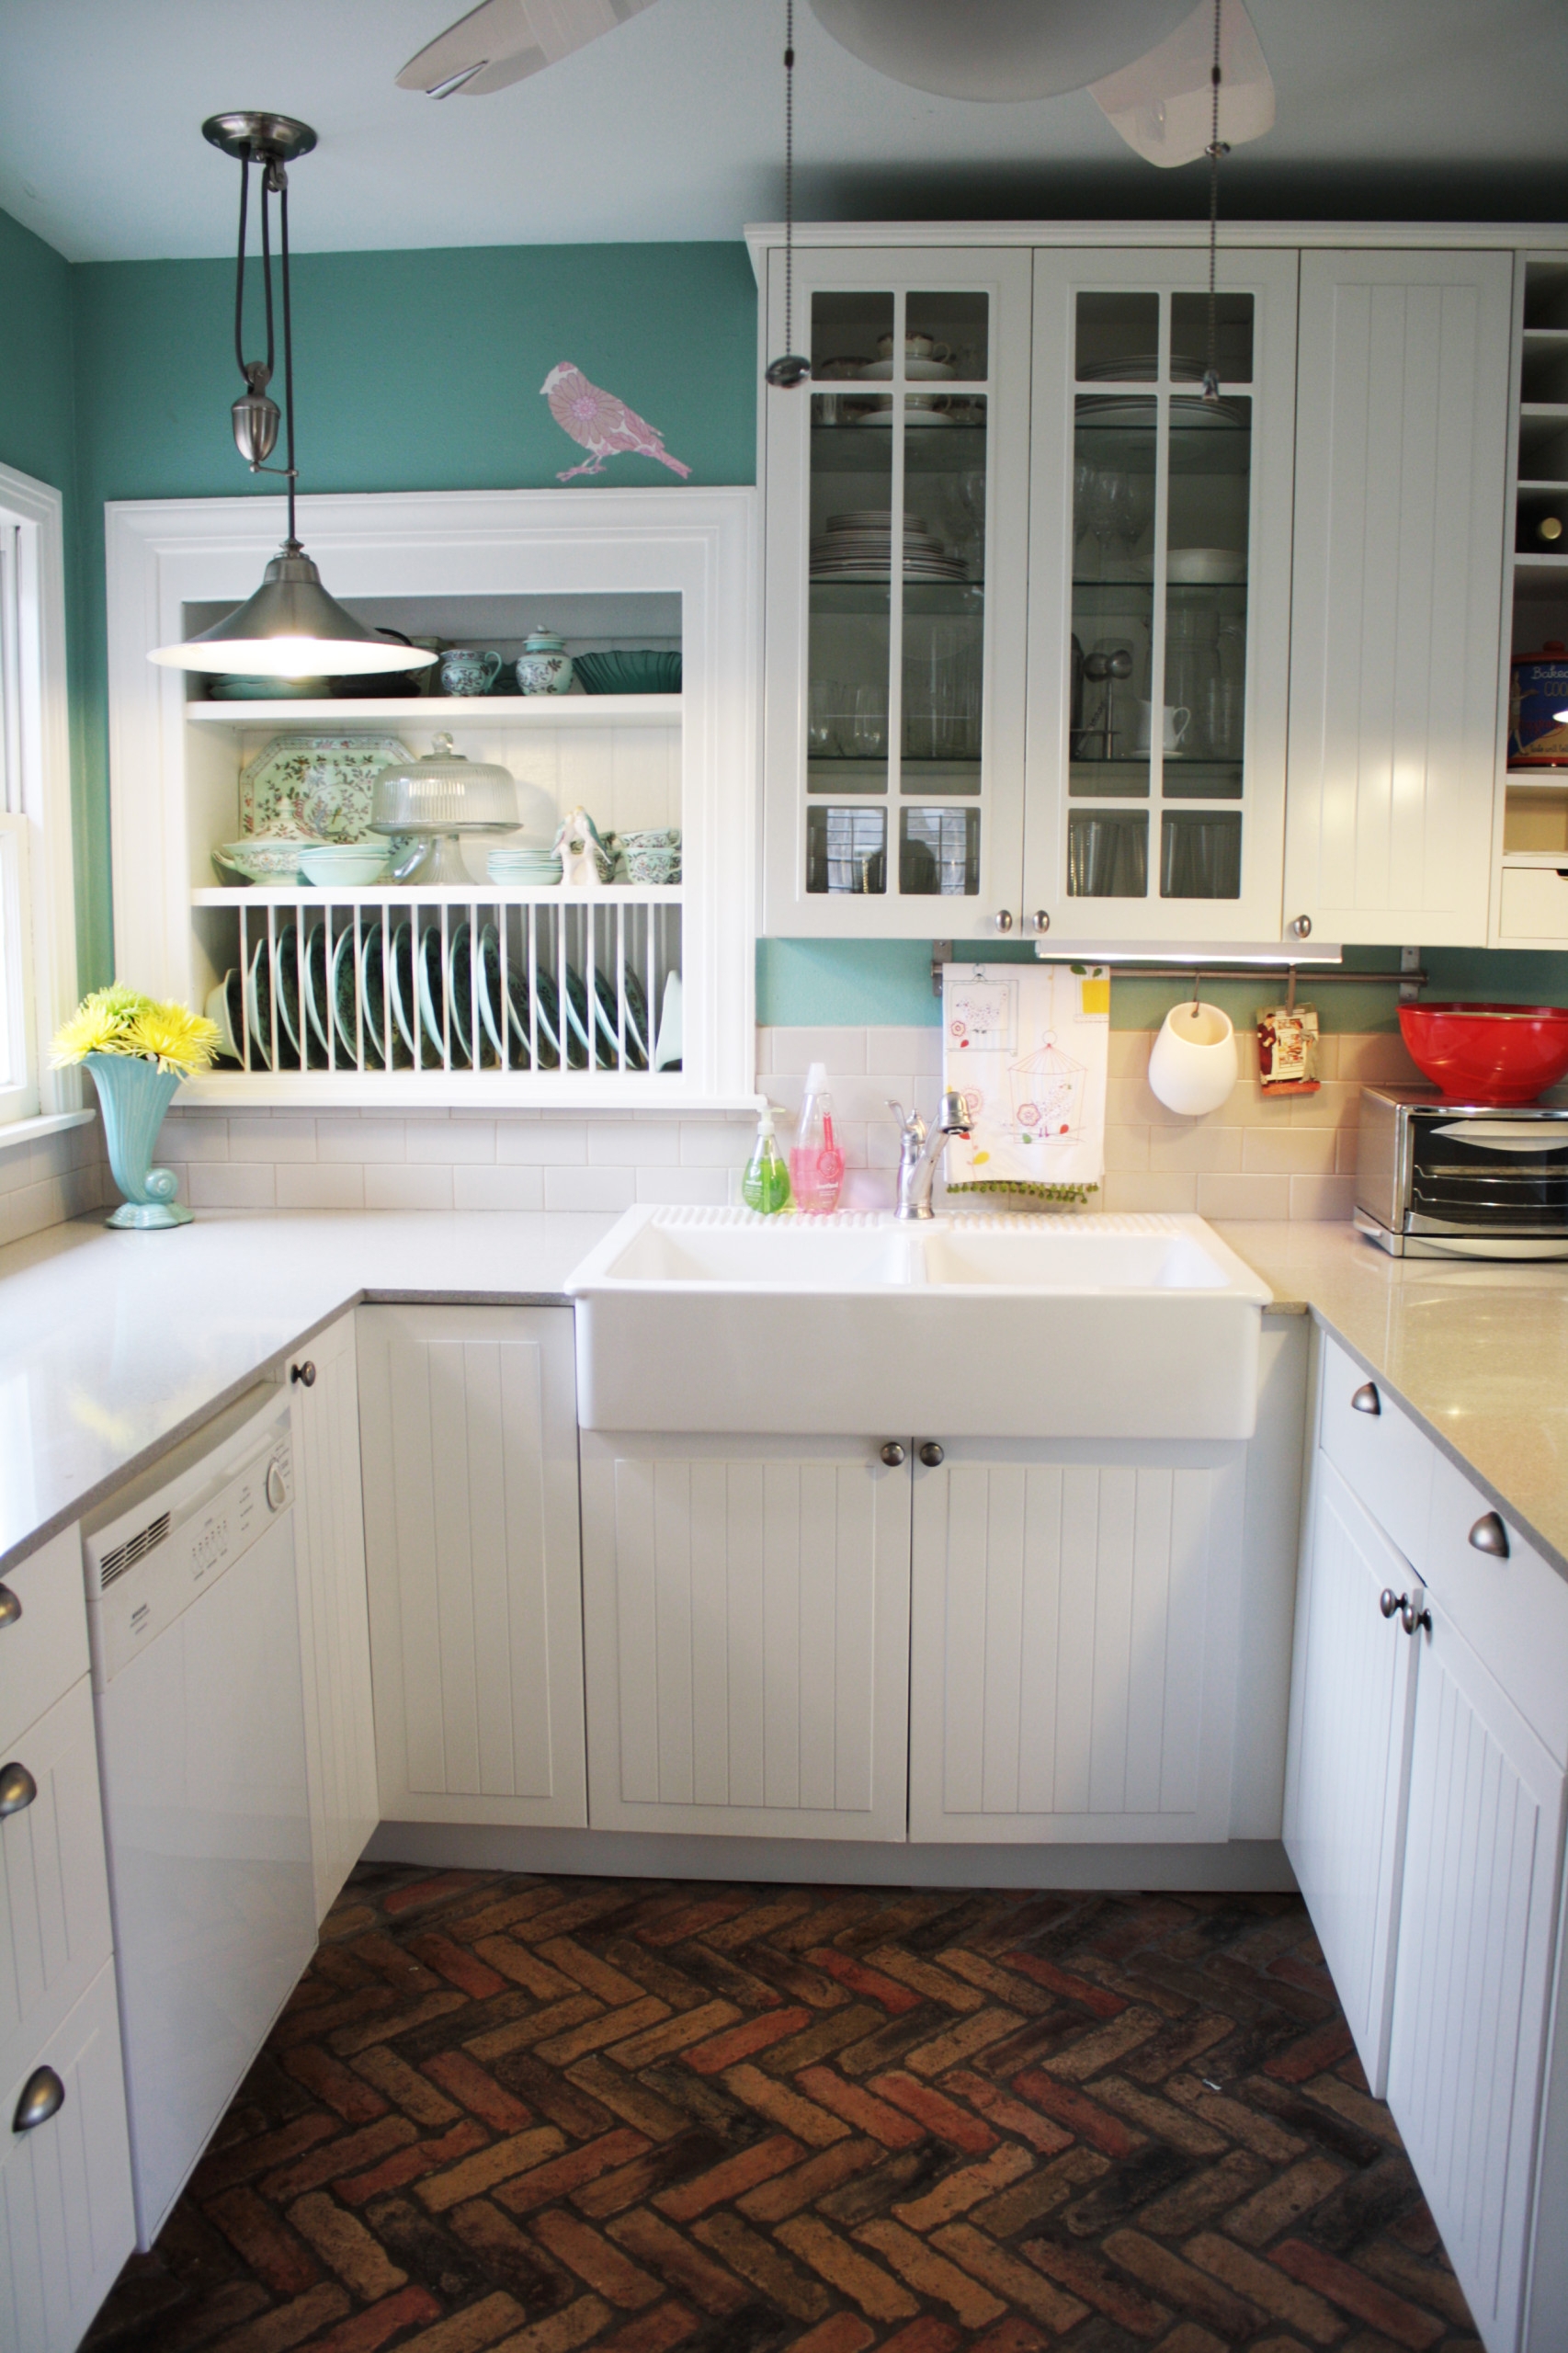 https://foter.com/photos/420/1-modern-kitchen-with-rustic-flooring-options.jpg